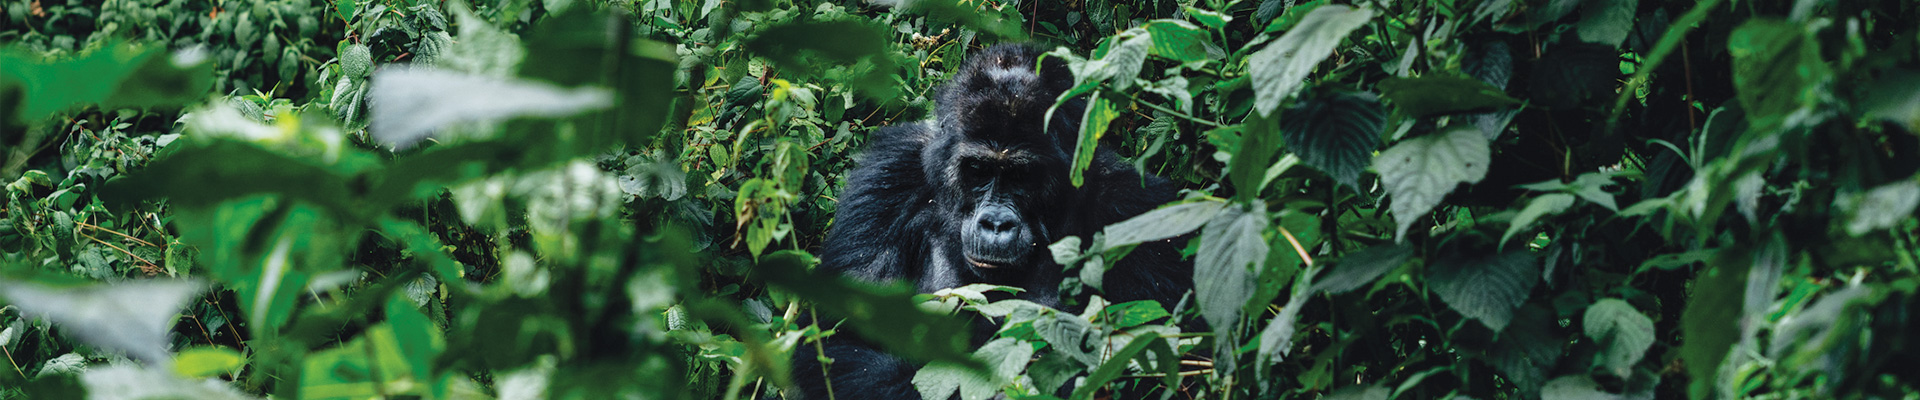 Gorillas and Chimpanzees Trekking Safari - Uganda Package (11 Days)